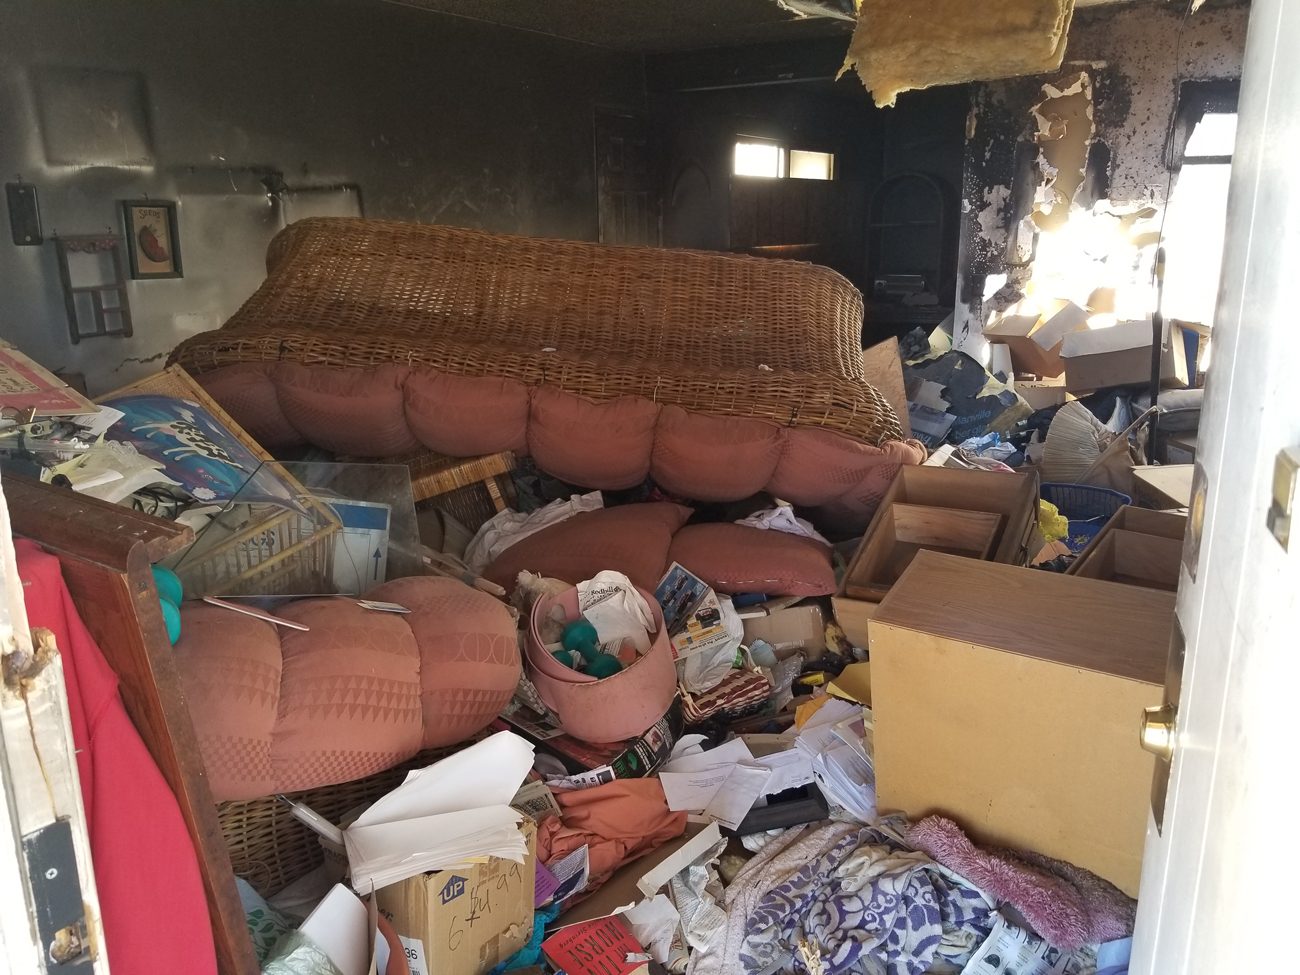 Fire damaged home interior